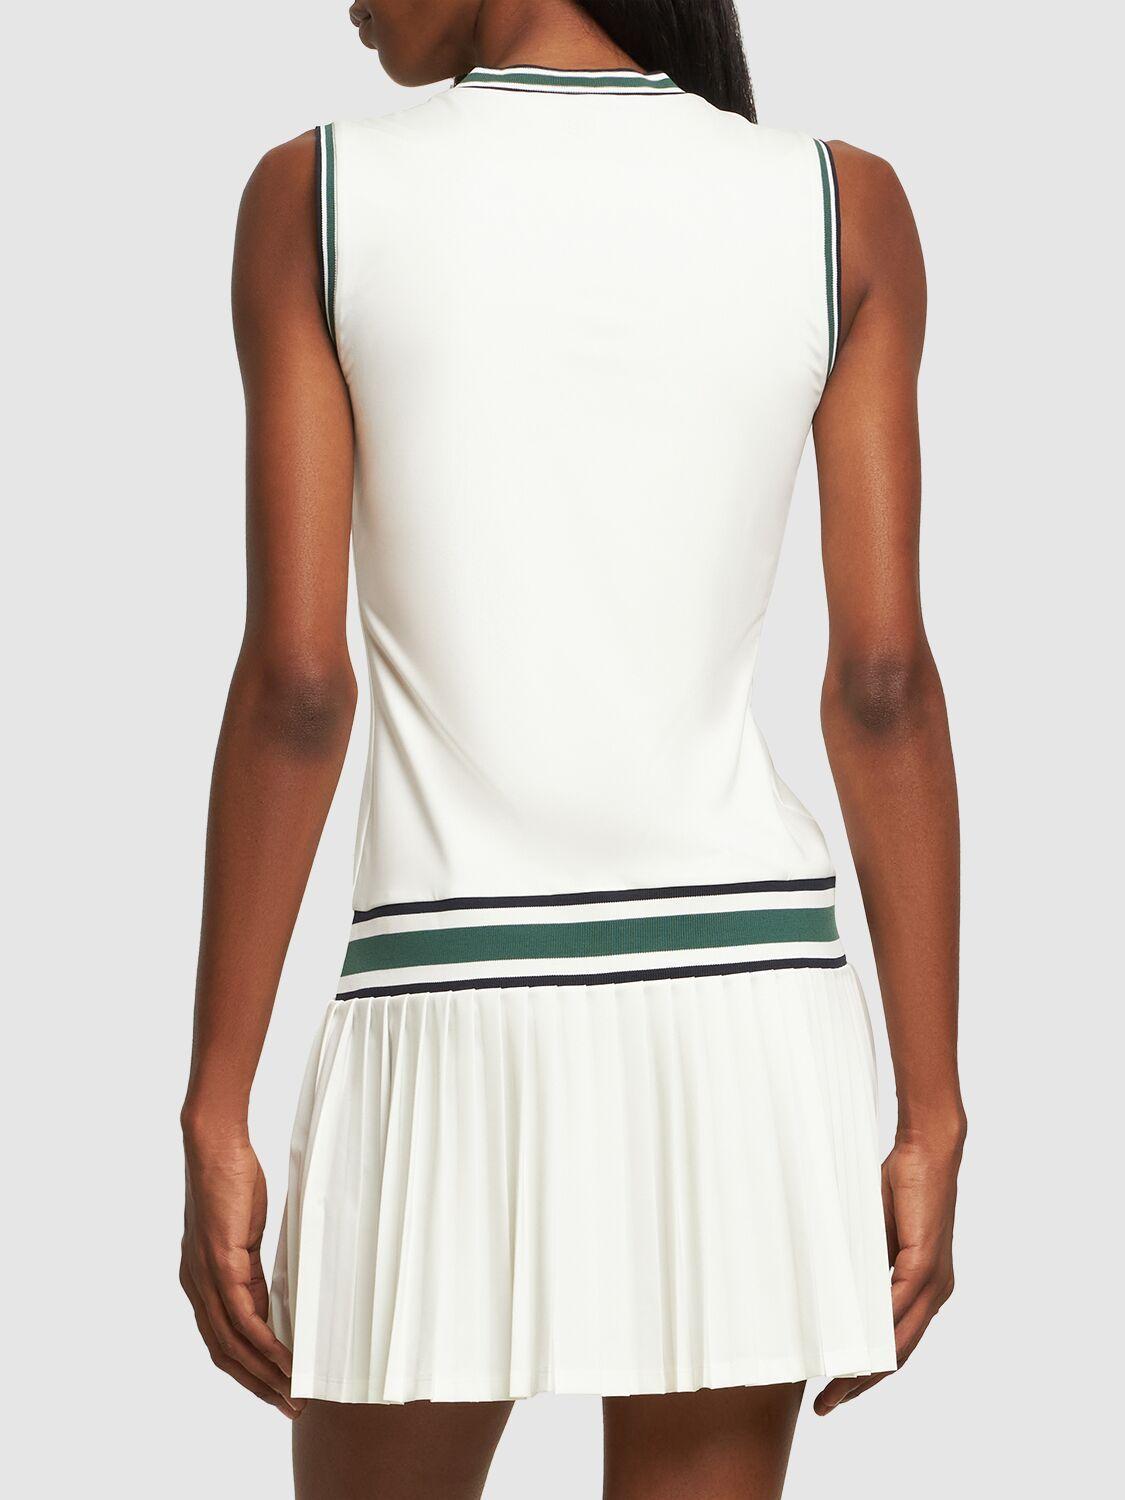 Alosoft Courtside Tennis Dress - White